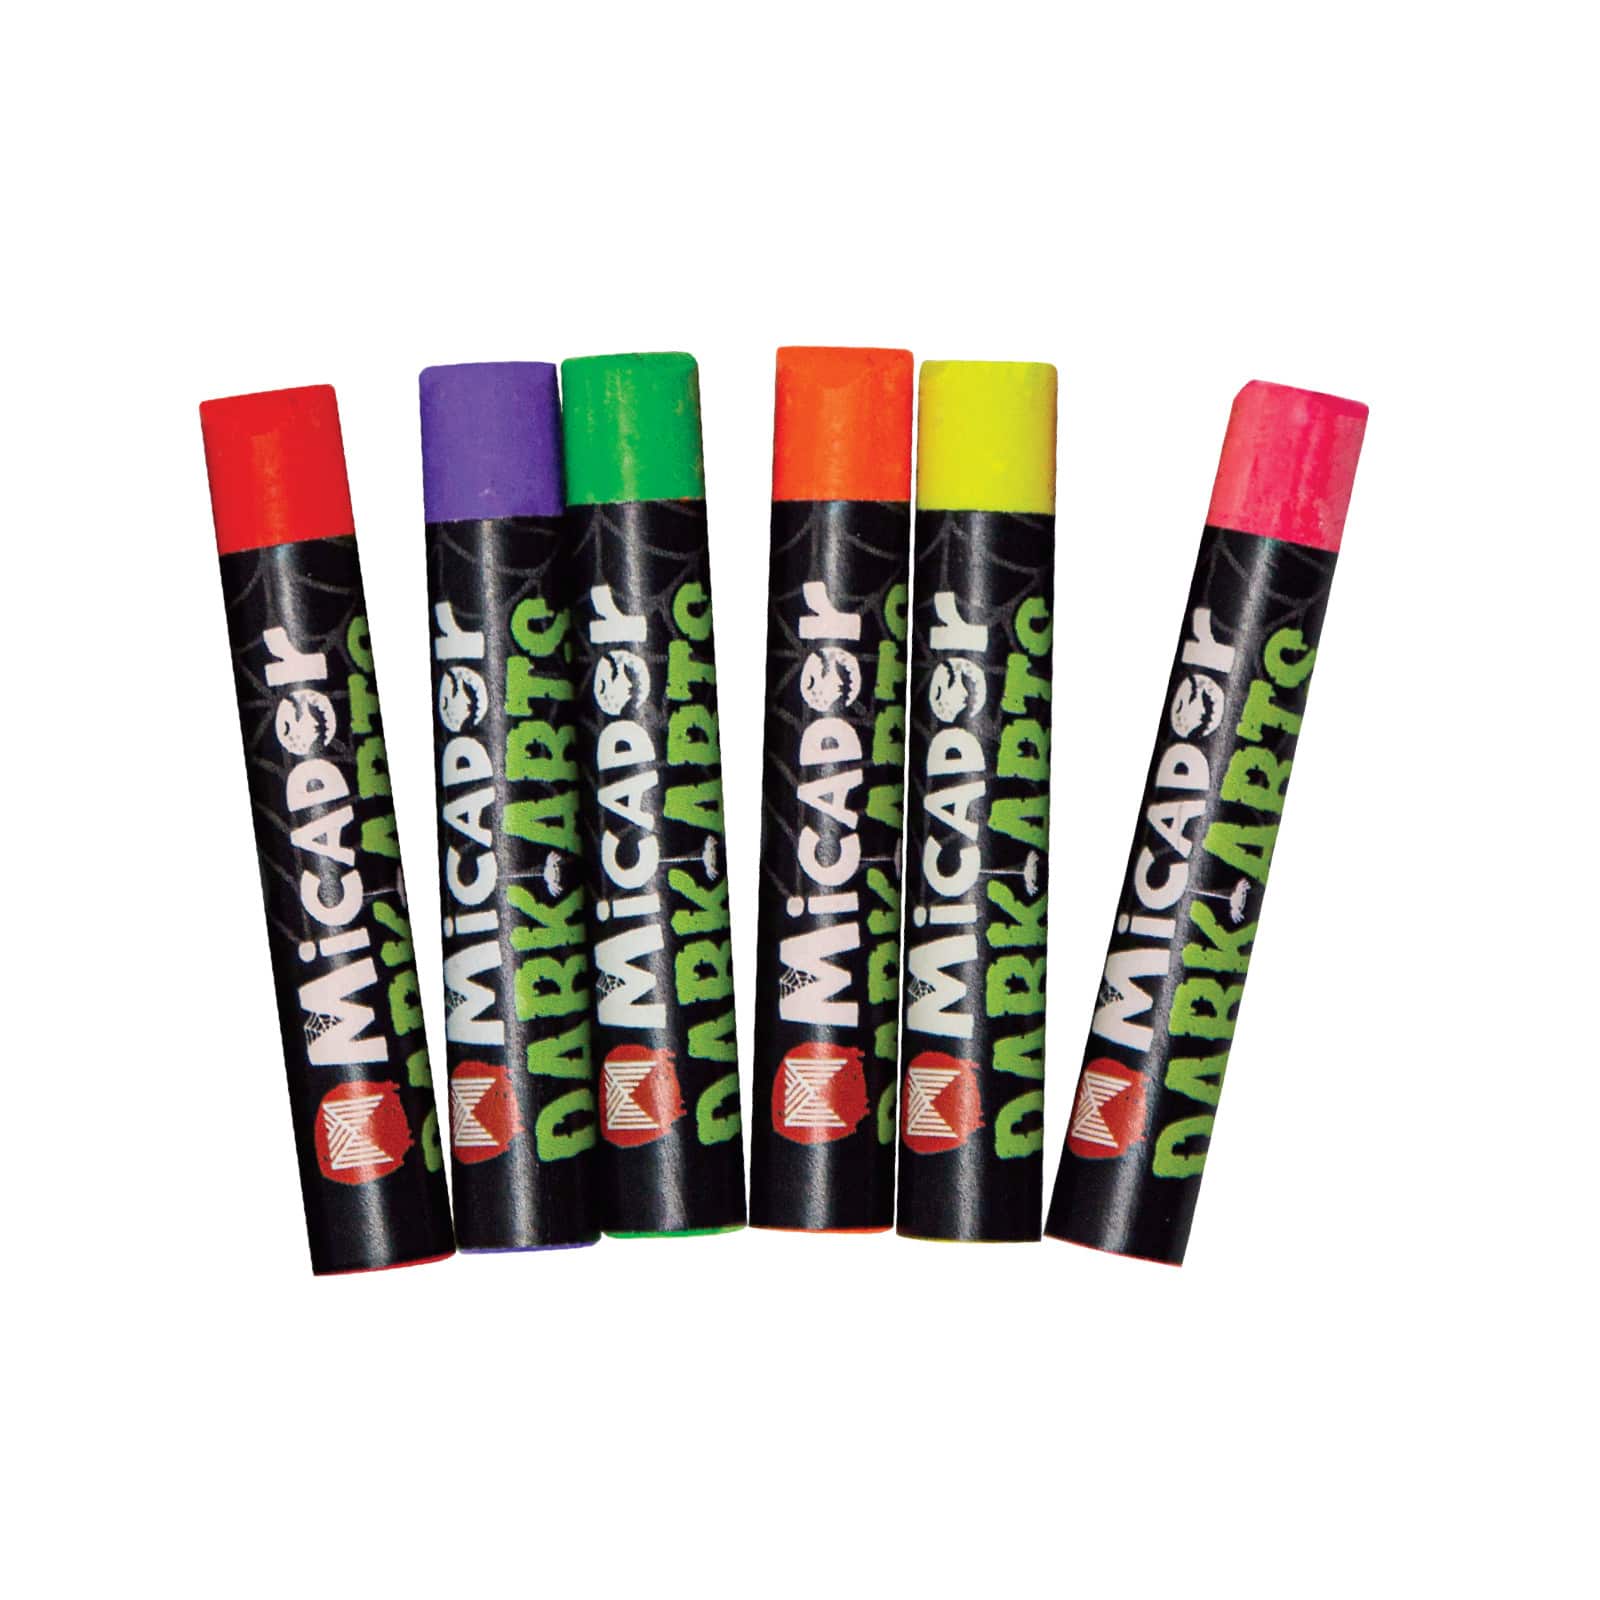 12 Packs: 6 ct. (72 total) Micador&#xAE; Dark Arts Neon Glow Oil Pastel Set